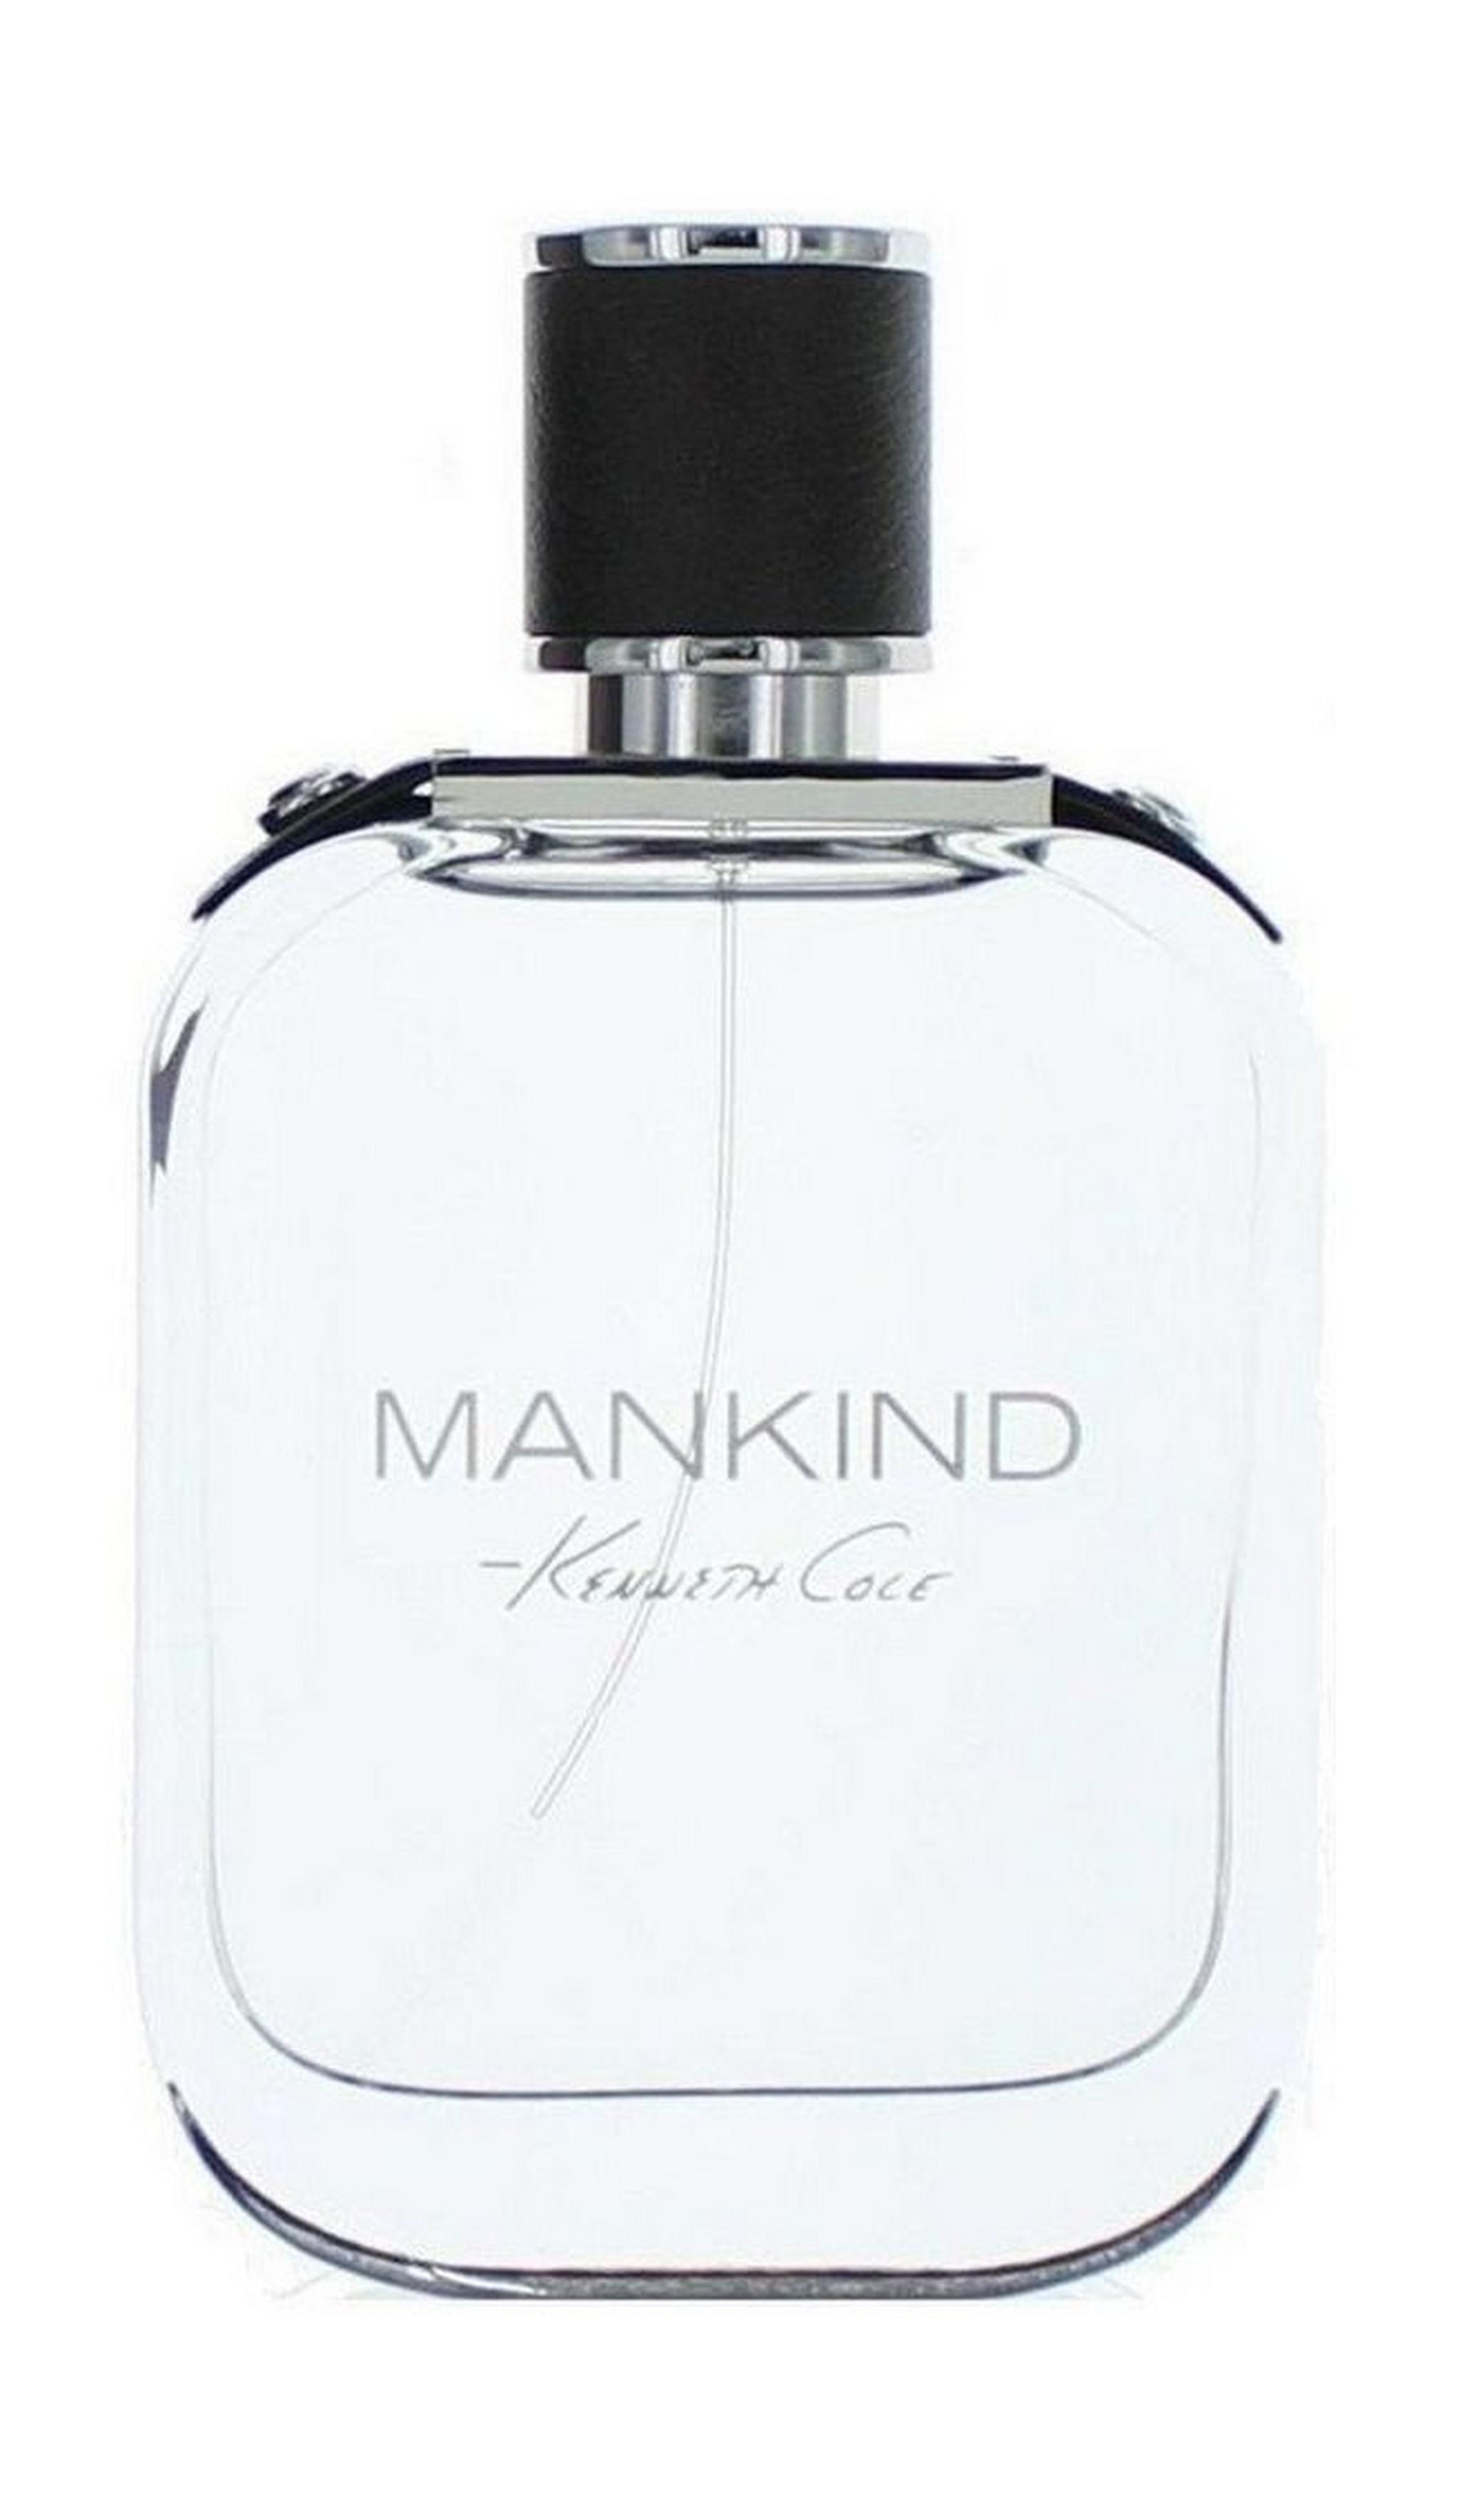 Mankind by Kenneth Cole 100ml Mens Perfume Eau de Toilette